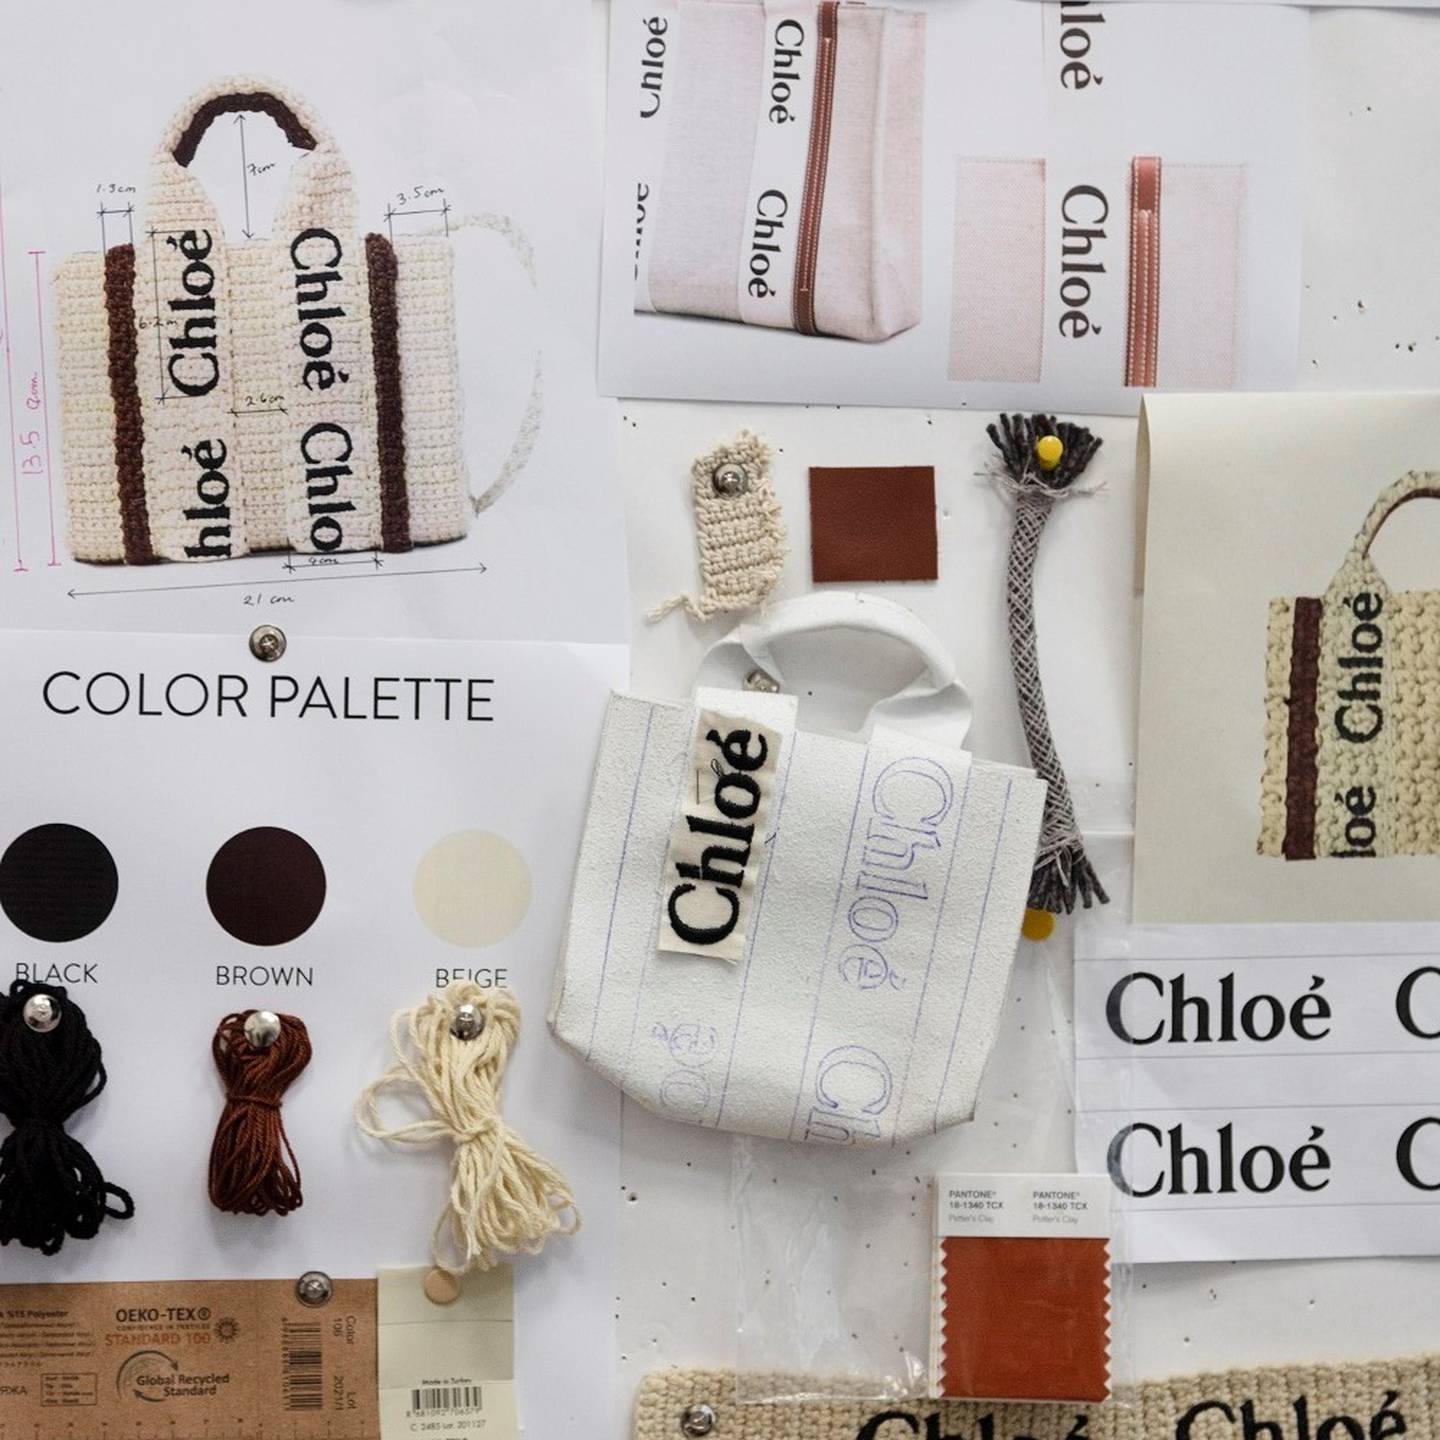 A mock-up of the Sarah's Bag x Chloe bag collaboration. Photo: Sarah's Bag/Chloe